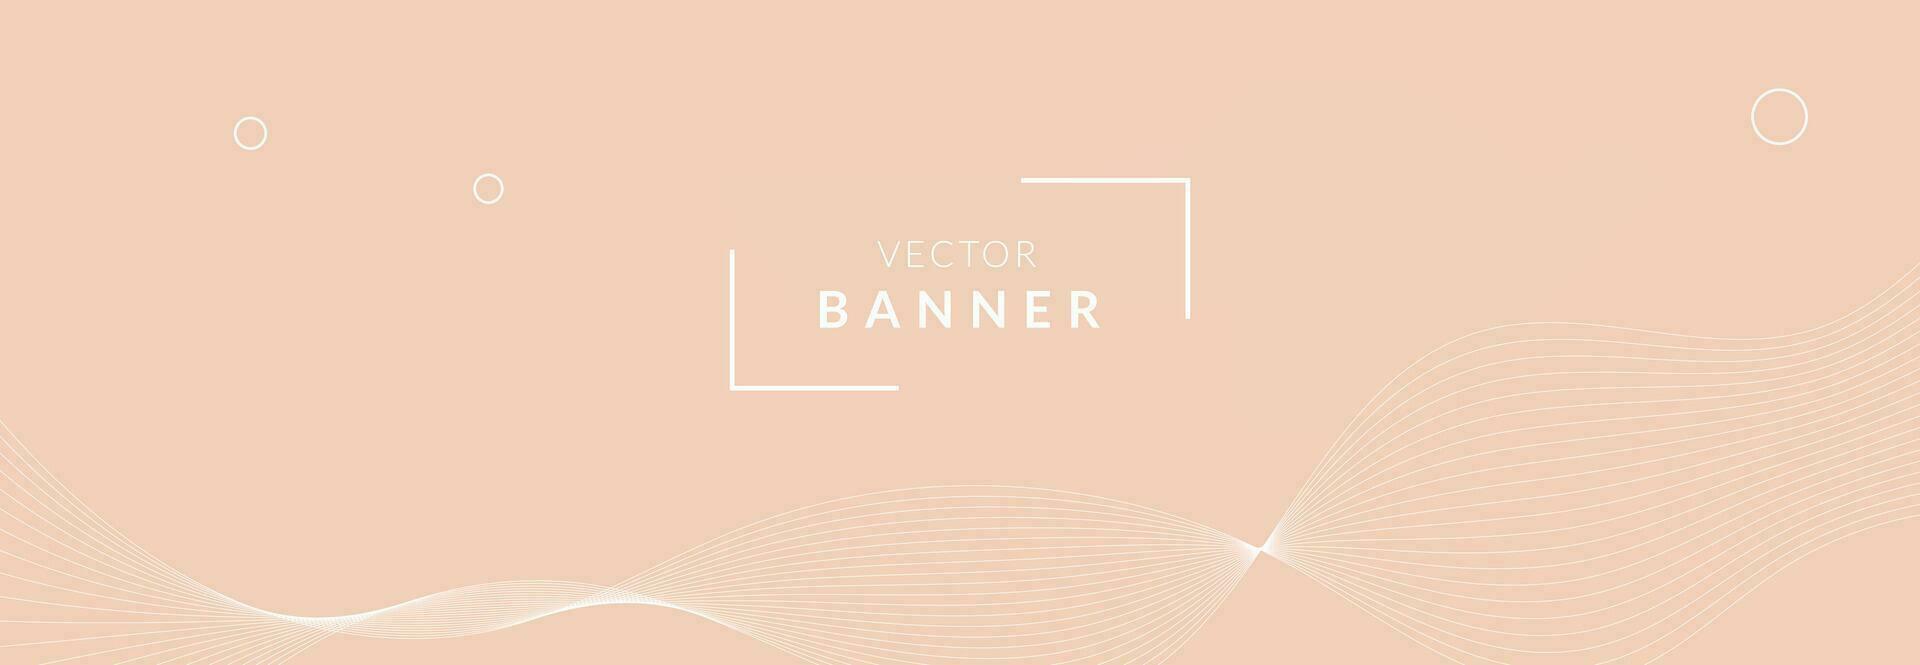 abstrakt Vektor Banner Design Vorlage.